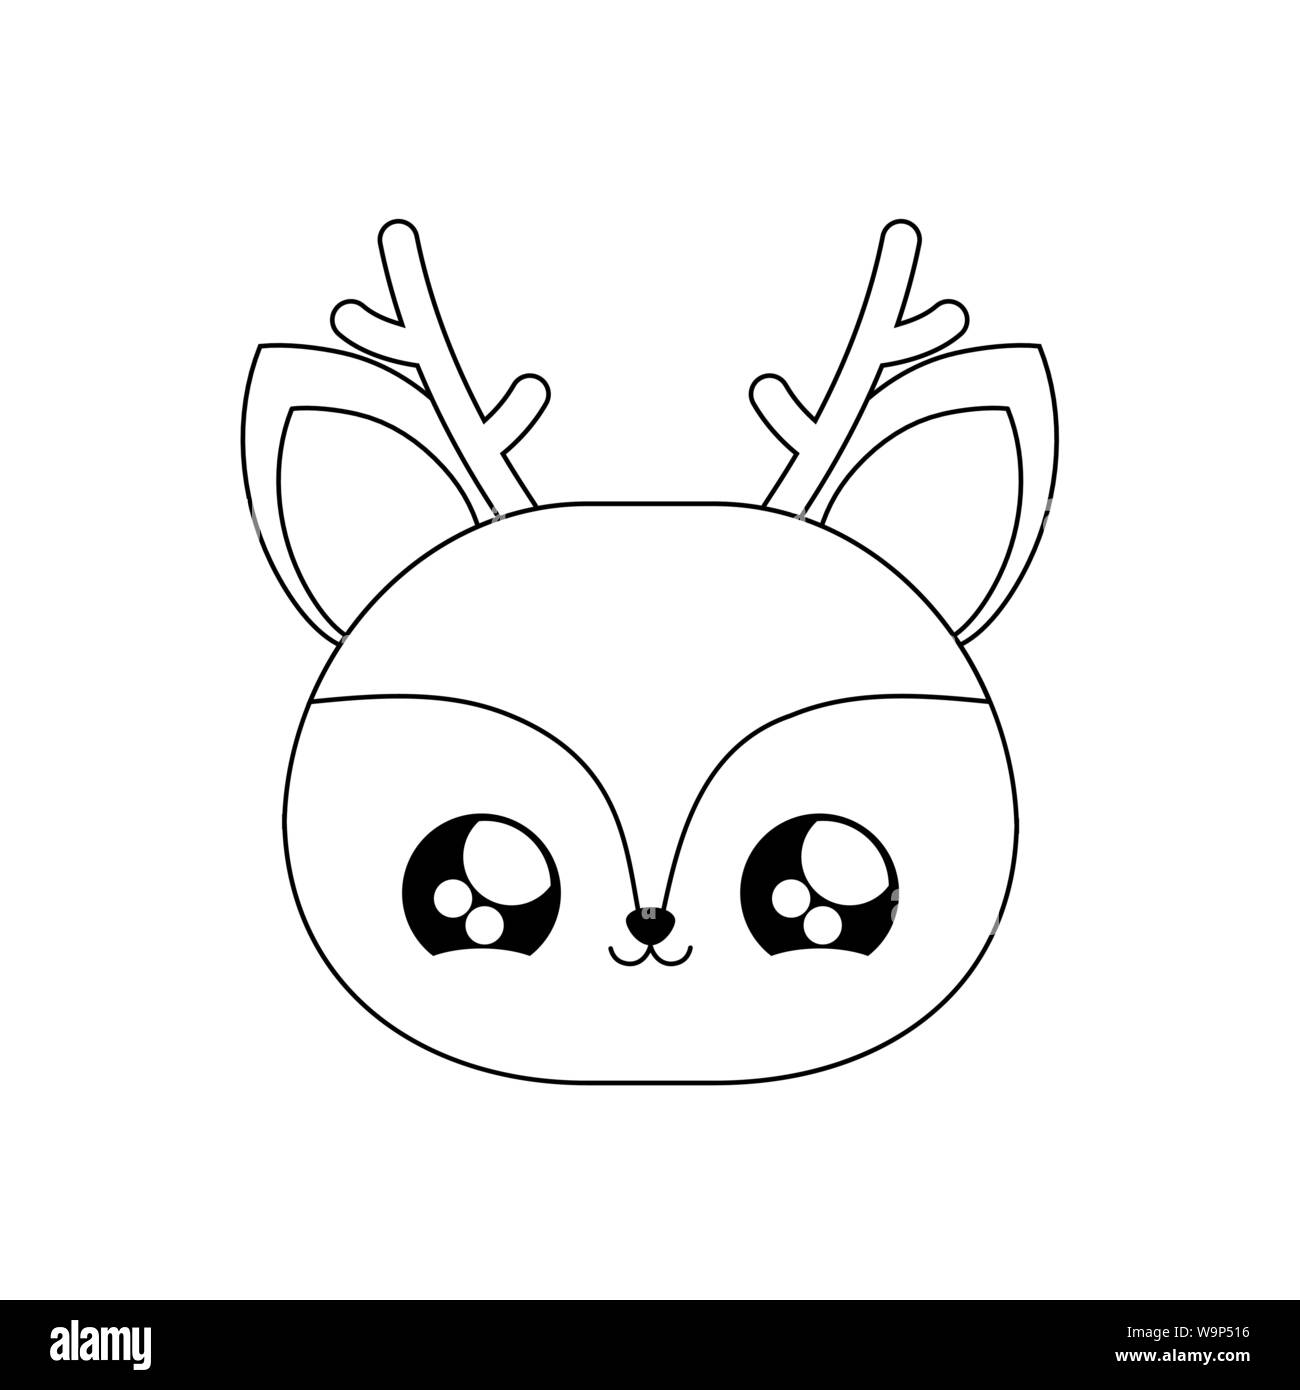 head of cute reindeer baby animal kawaii style vector illustration design  Stock Vector Image & Art - Alamy